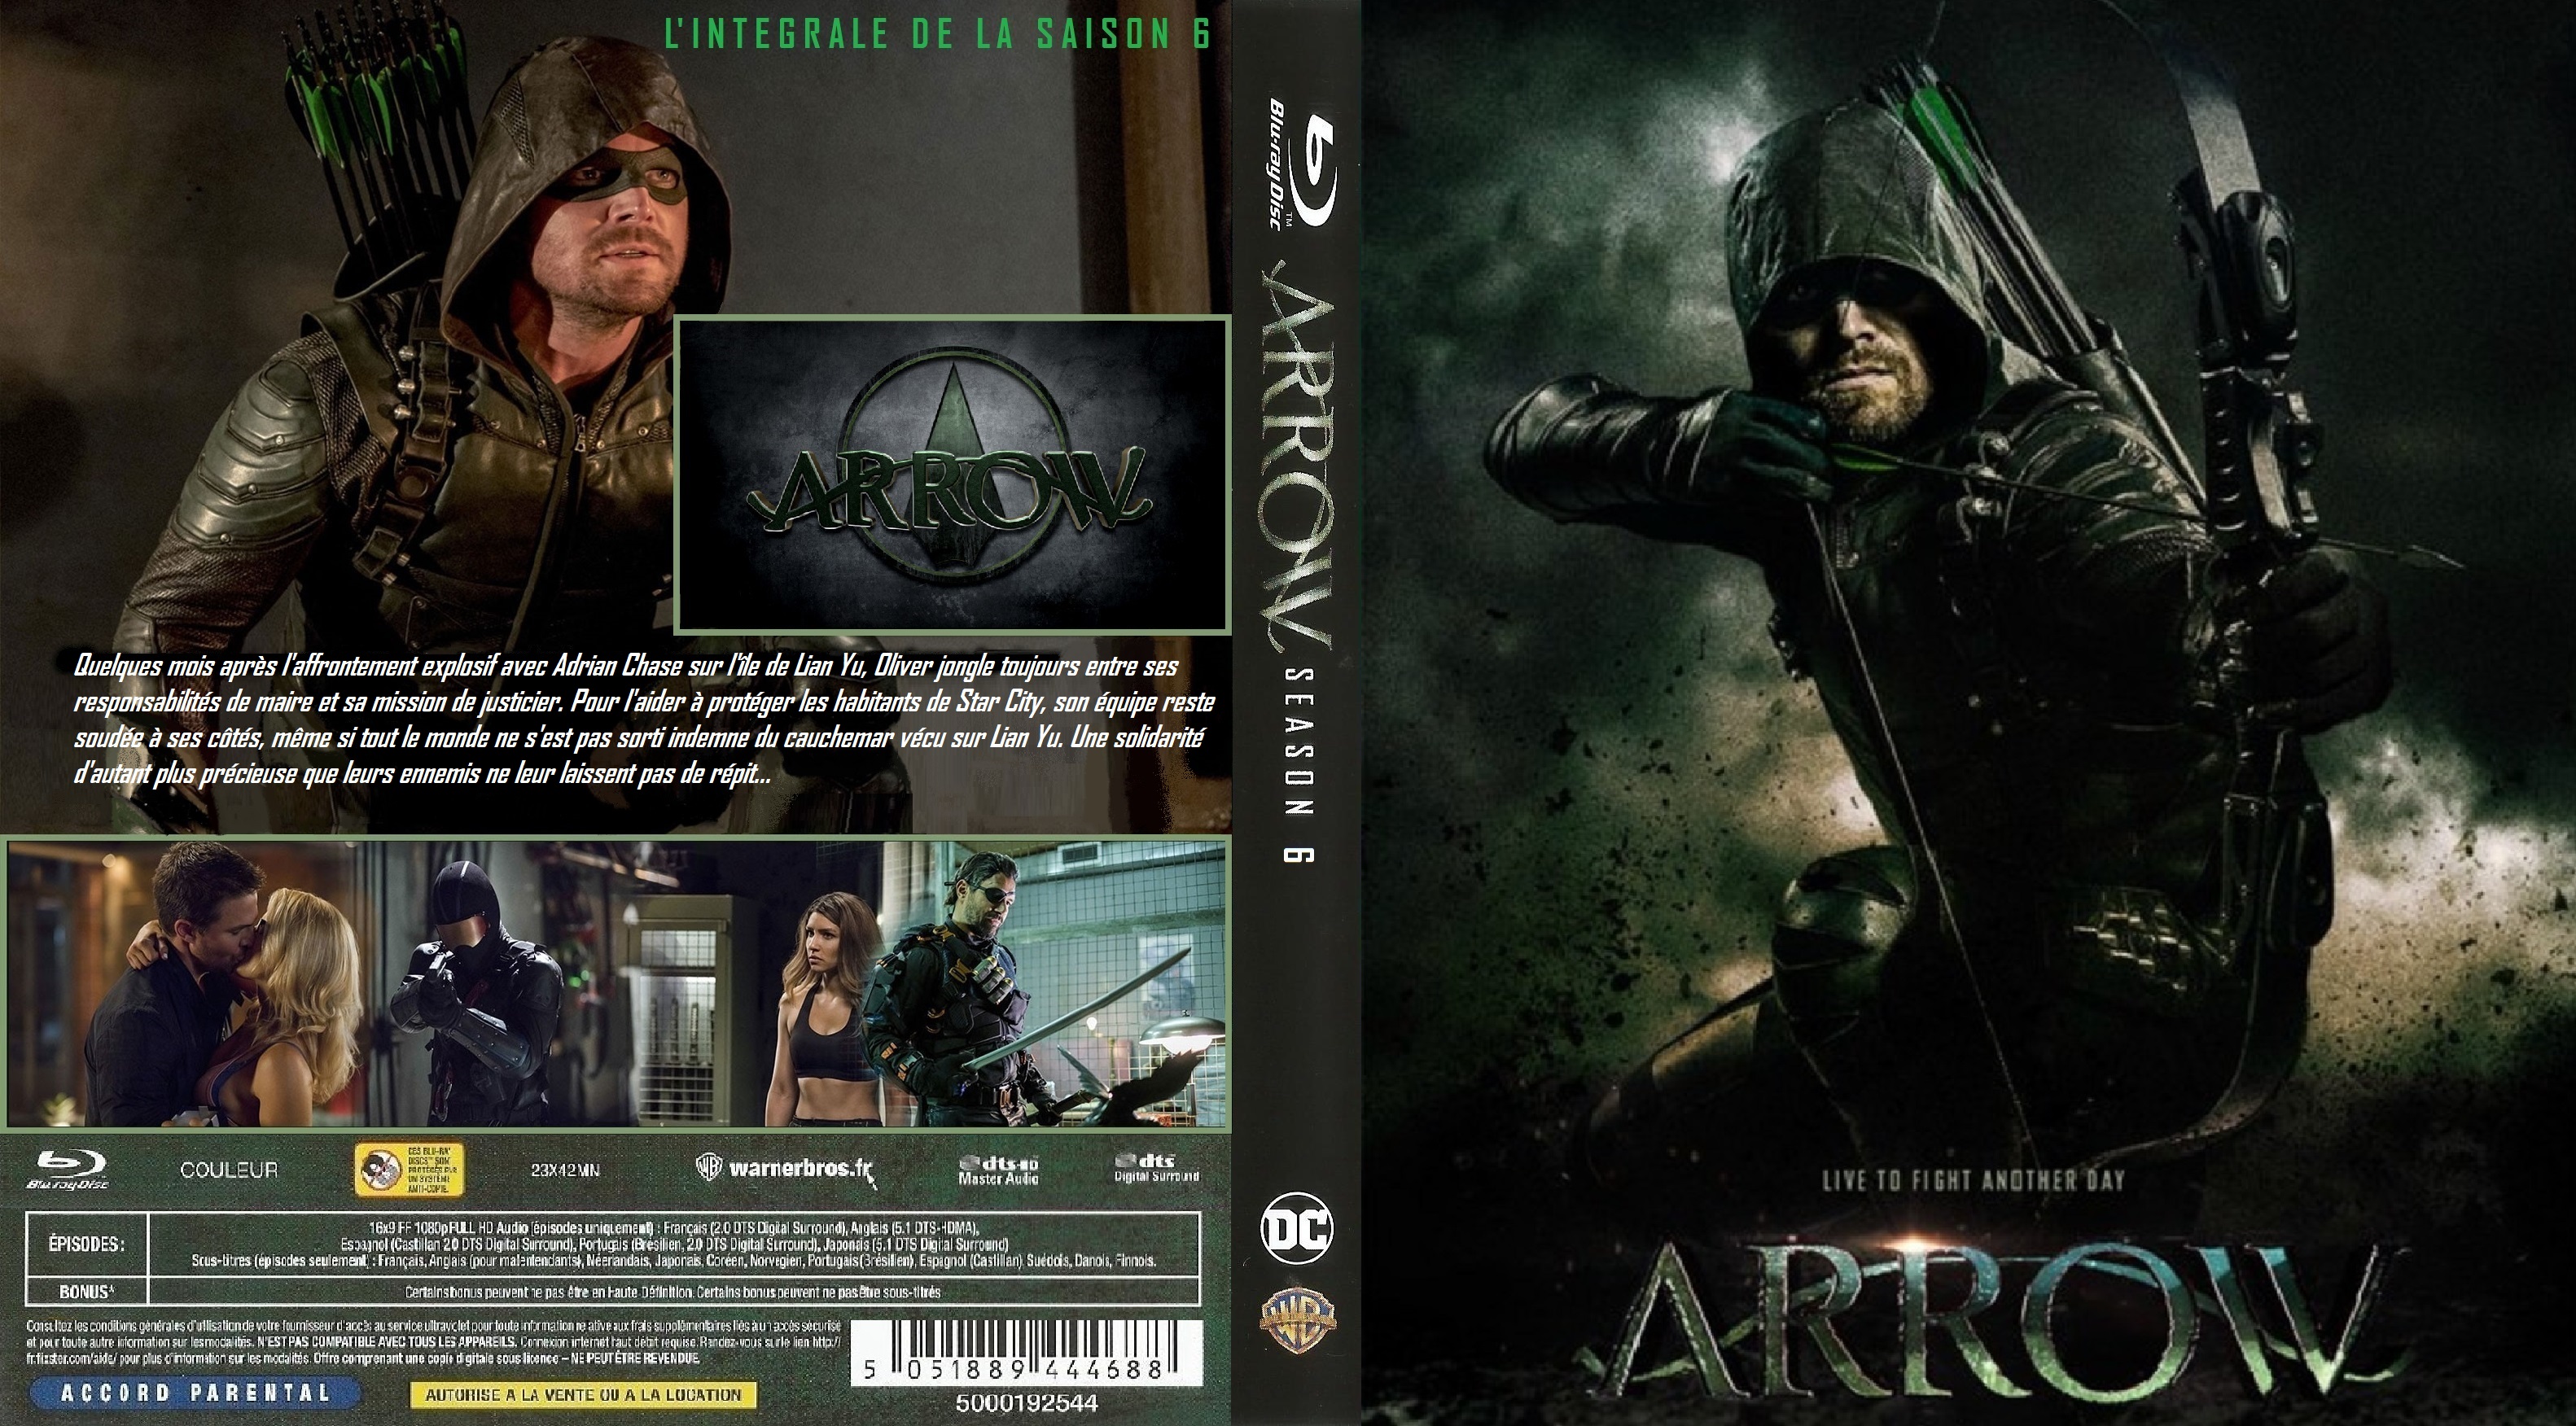 Jaquette DVD Arrow saison 6 custom (BLU-RAY)